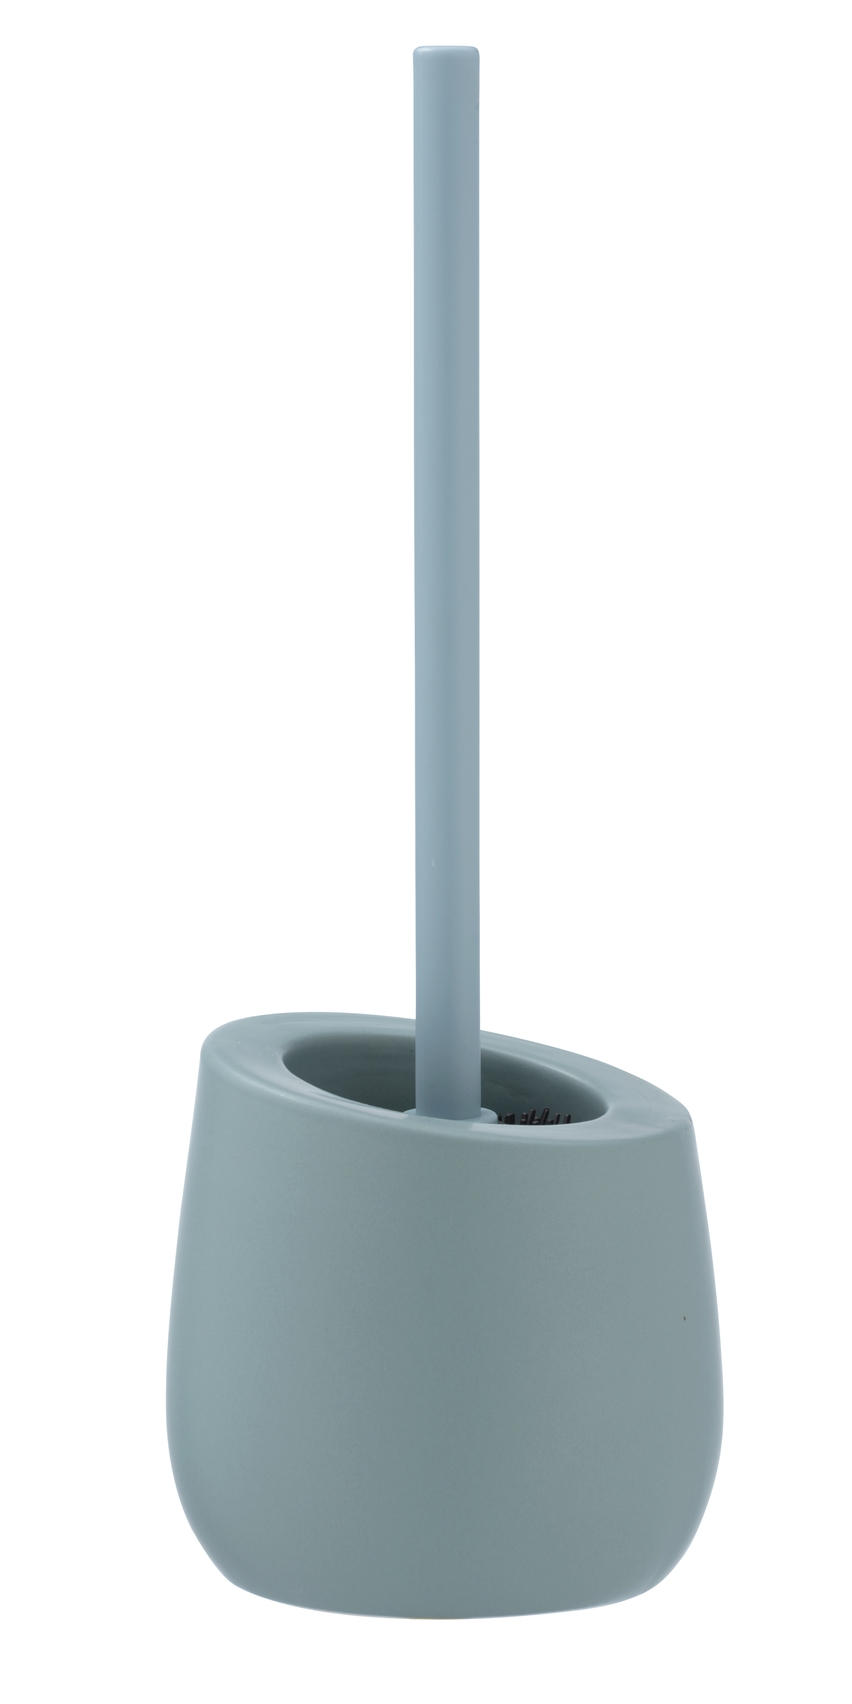 TOALETTBORSTSET i keramik  plast   - blå/grå, Basics, plast/keramik (13,5/38cm)